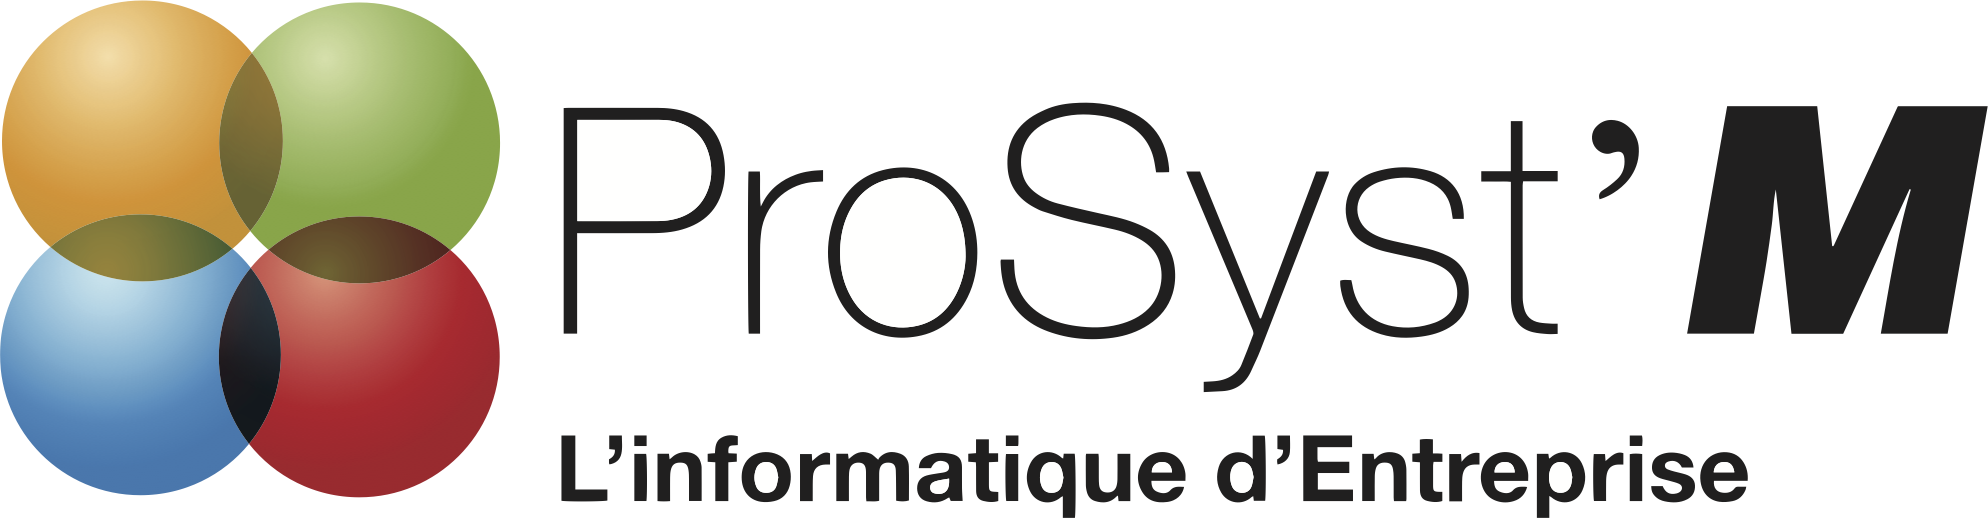 PROSYST'M Logo